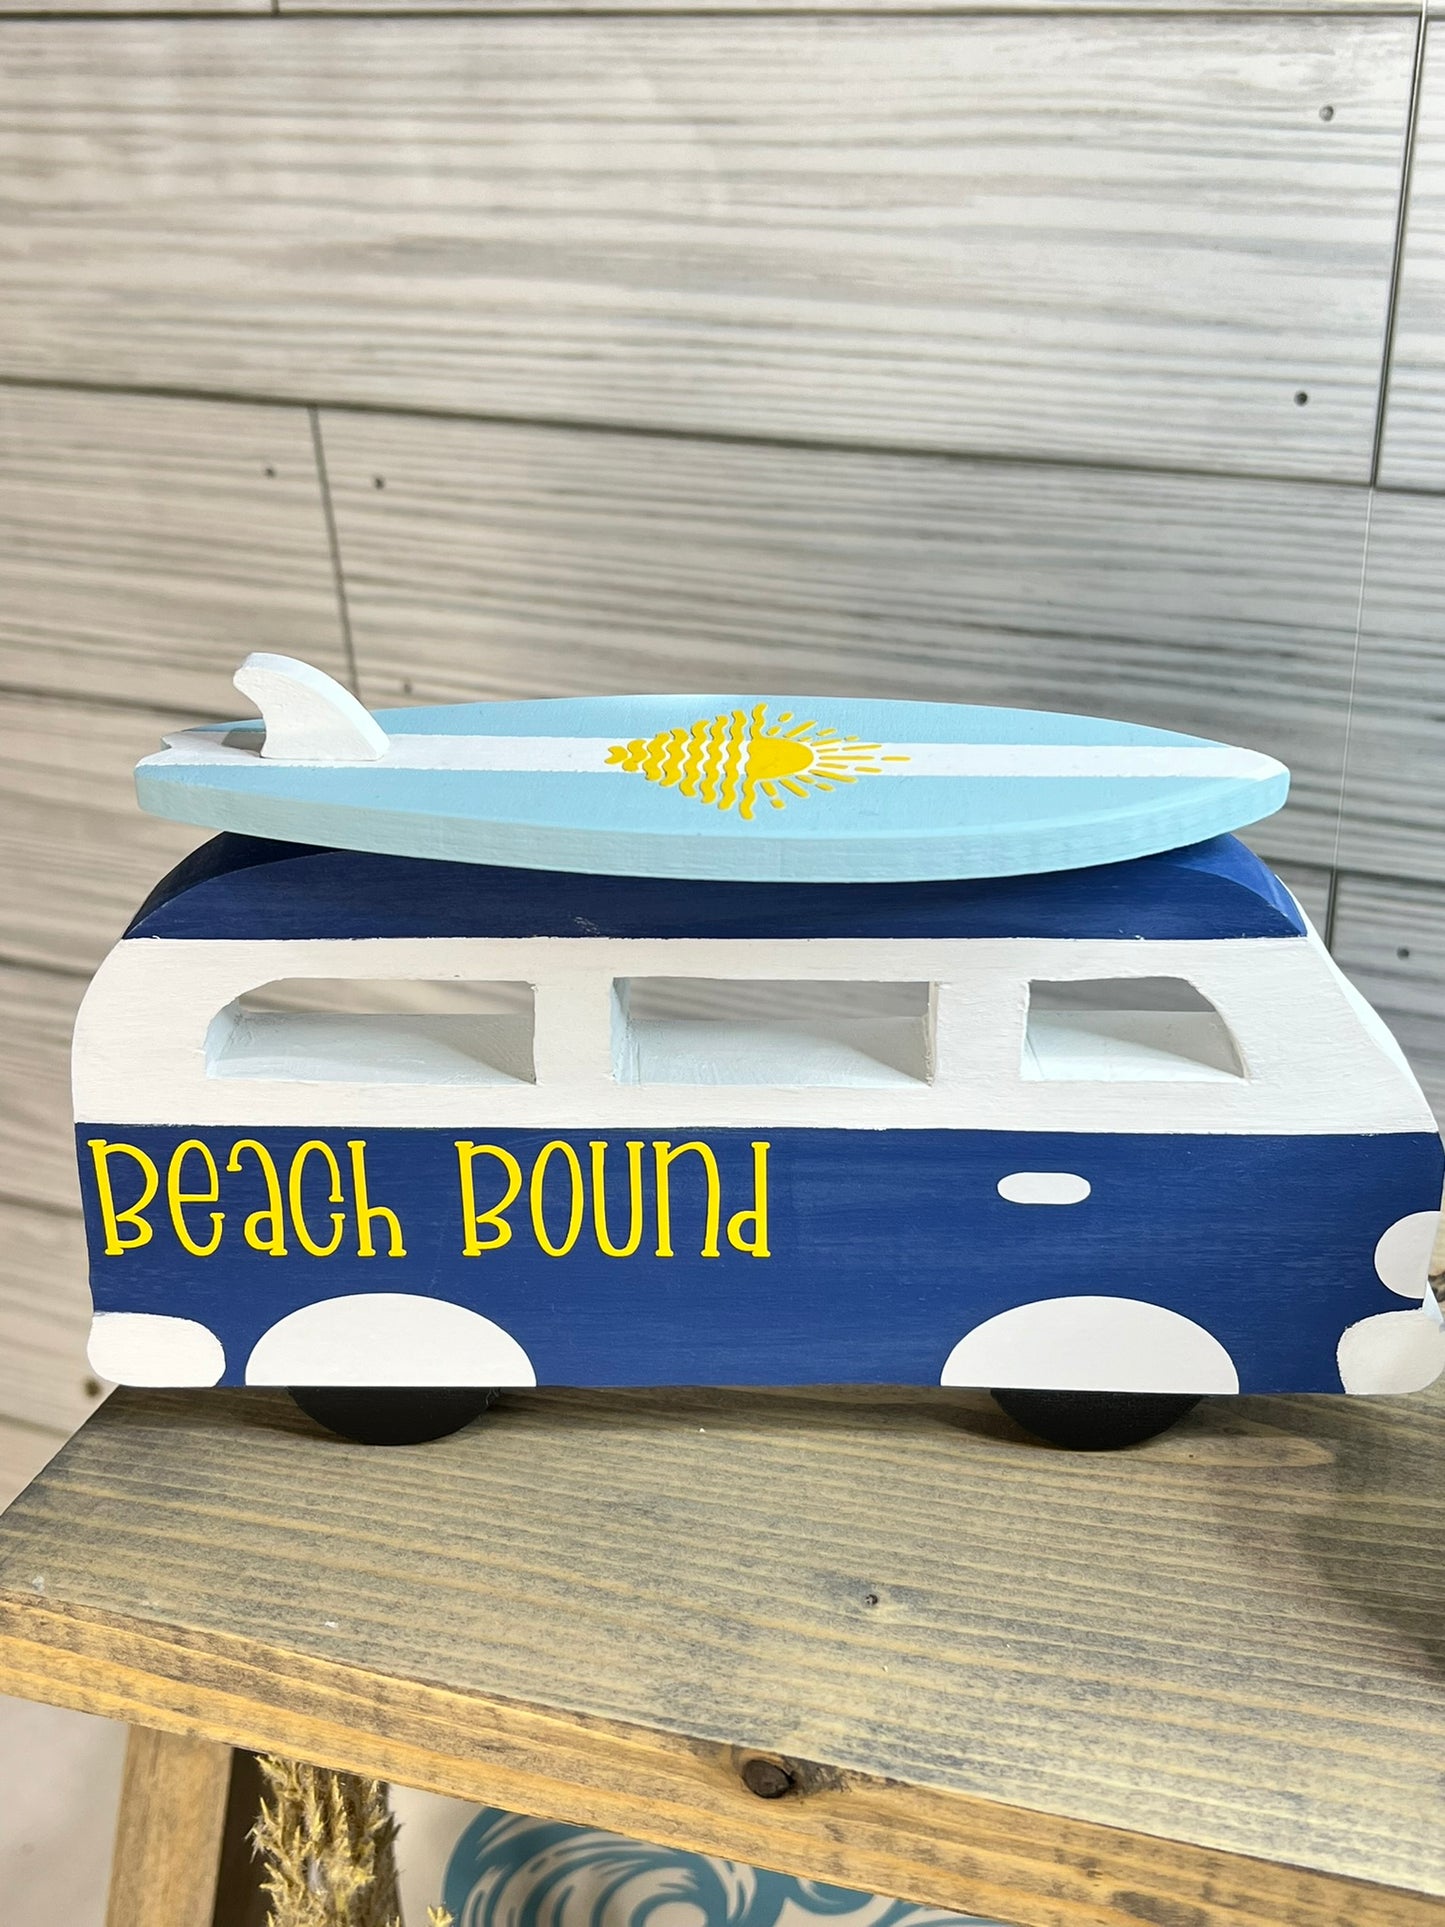 Retro Wooden Surf Bus